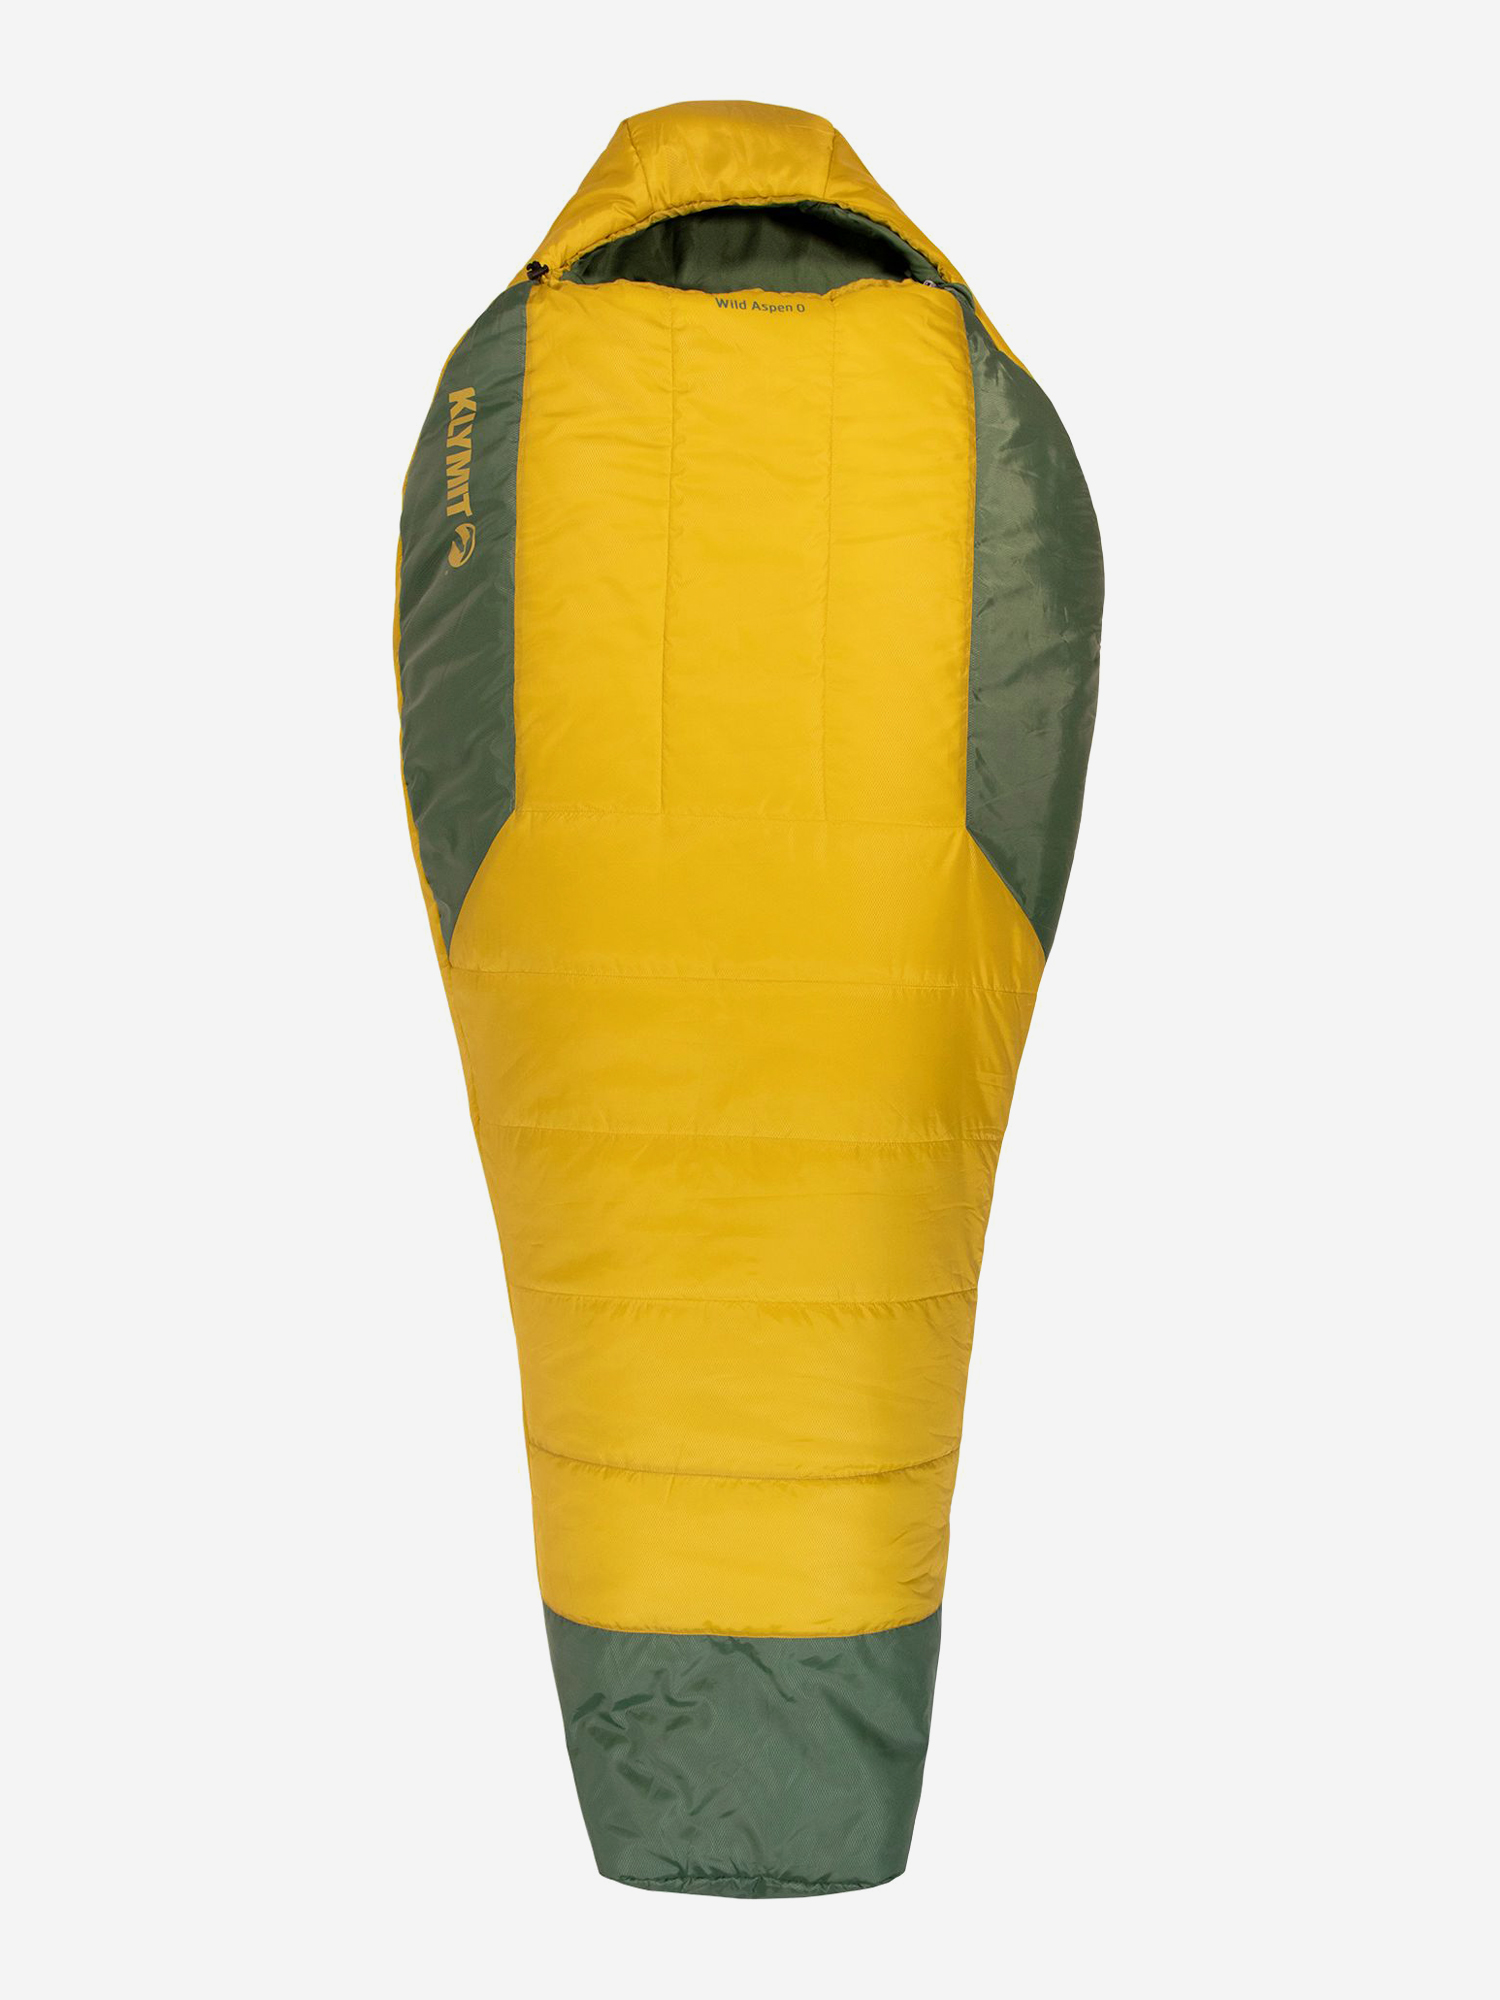 Спальный мешок KLYMIT Wild Aspen 0 Extra Large (13WAYL00E) желто-зеленый, Желтый спальный мешок klymit wild aspen 0 large 13wayl00d желто зеленый желтый